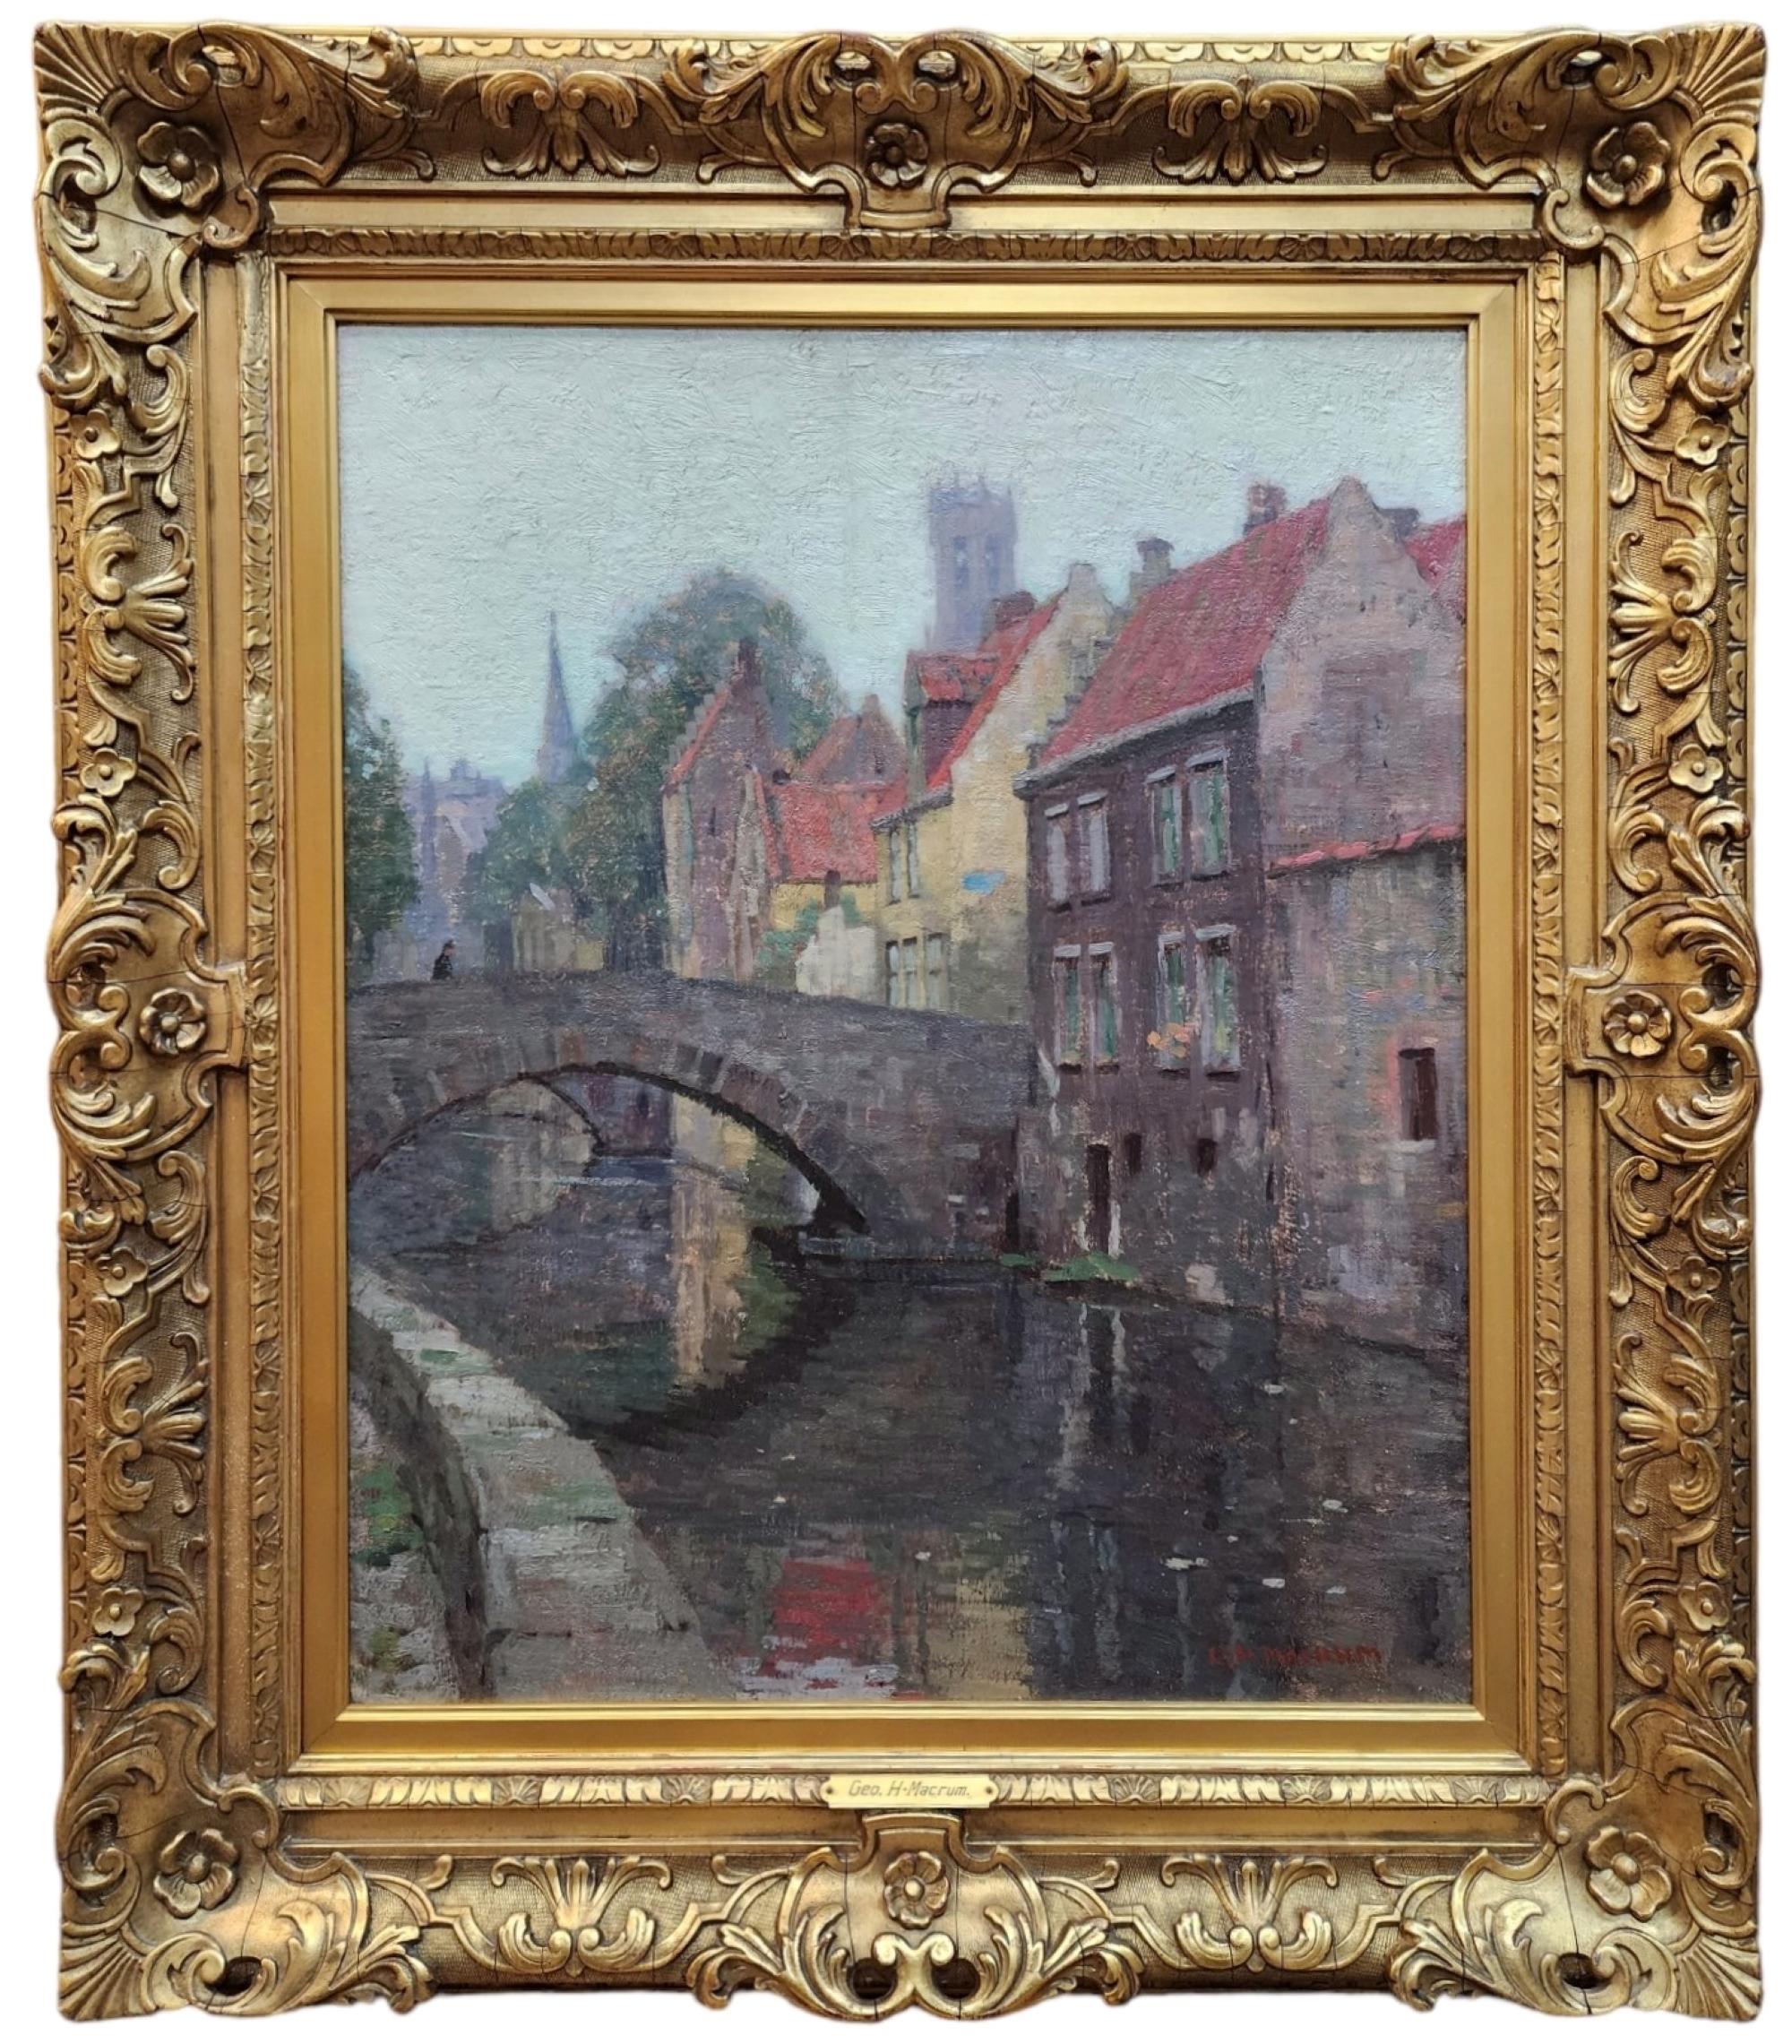 Canal à Bruges, Belgium, Bridge, Early 20th Century European City, Urban Genre - Painting by George Herbert Macrum